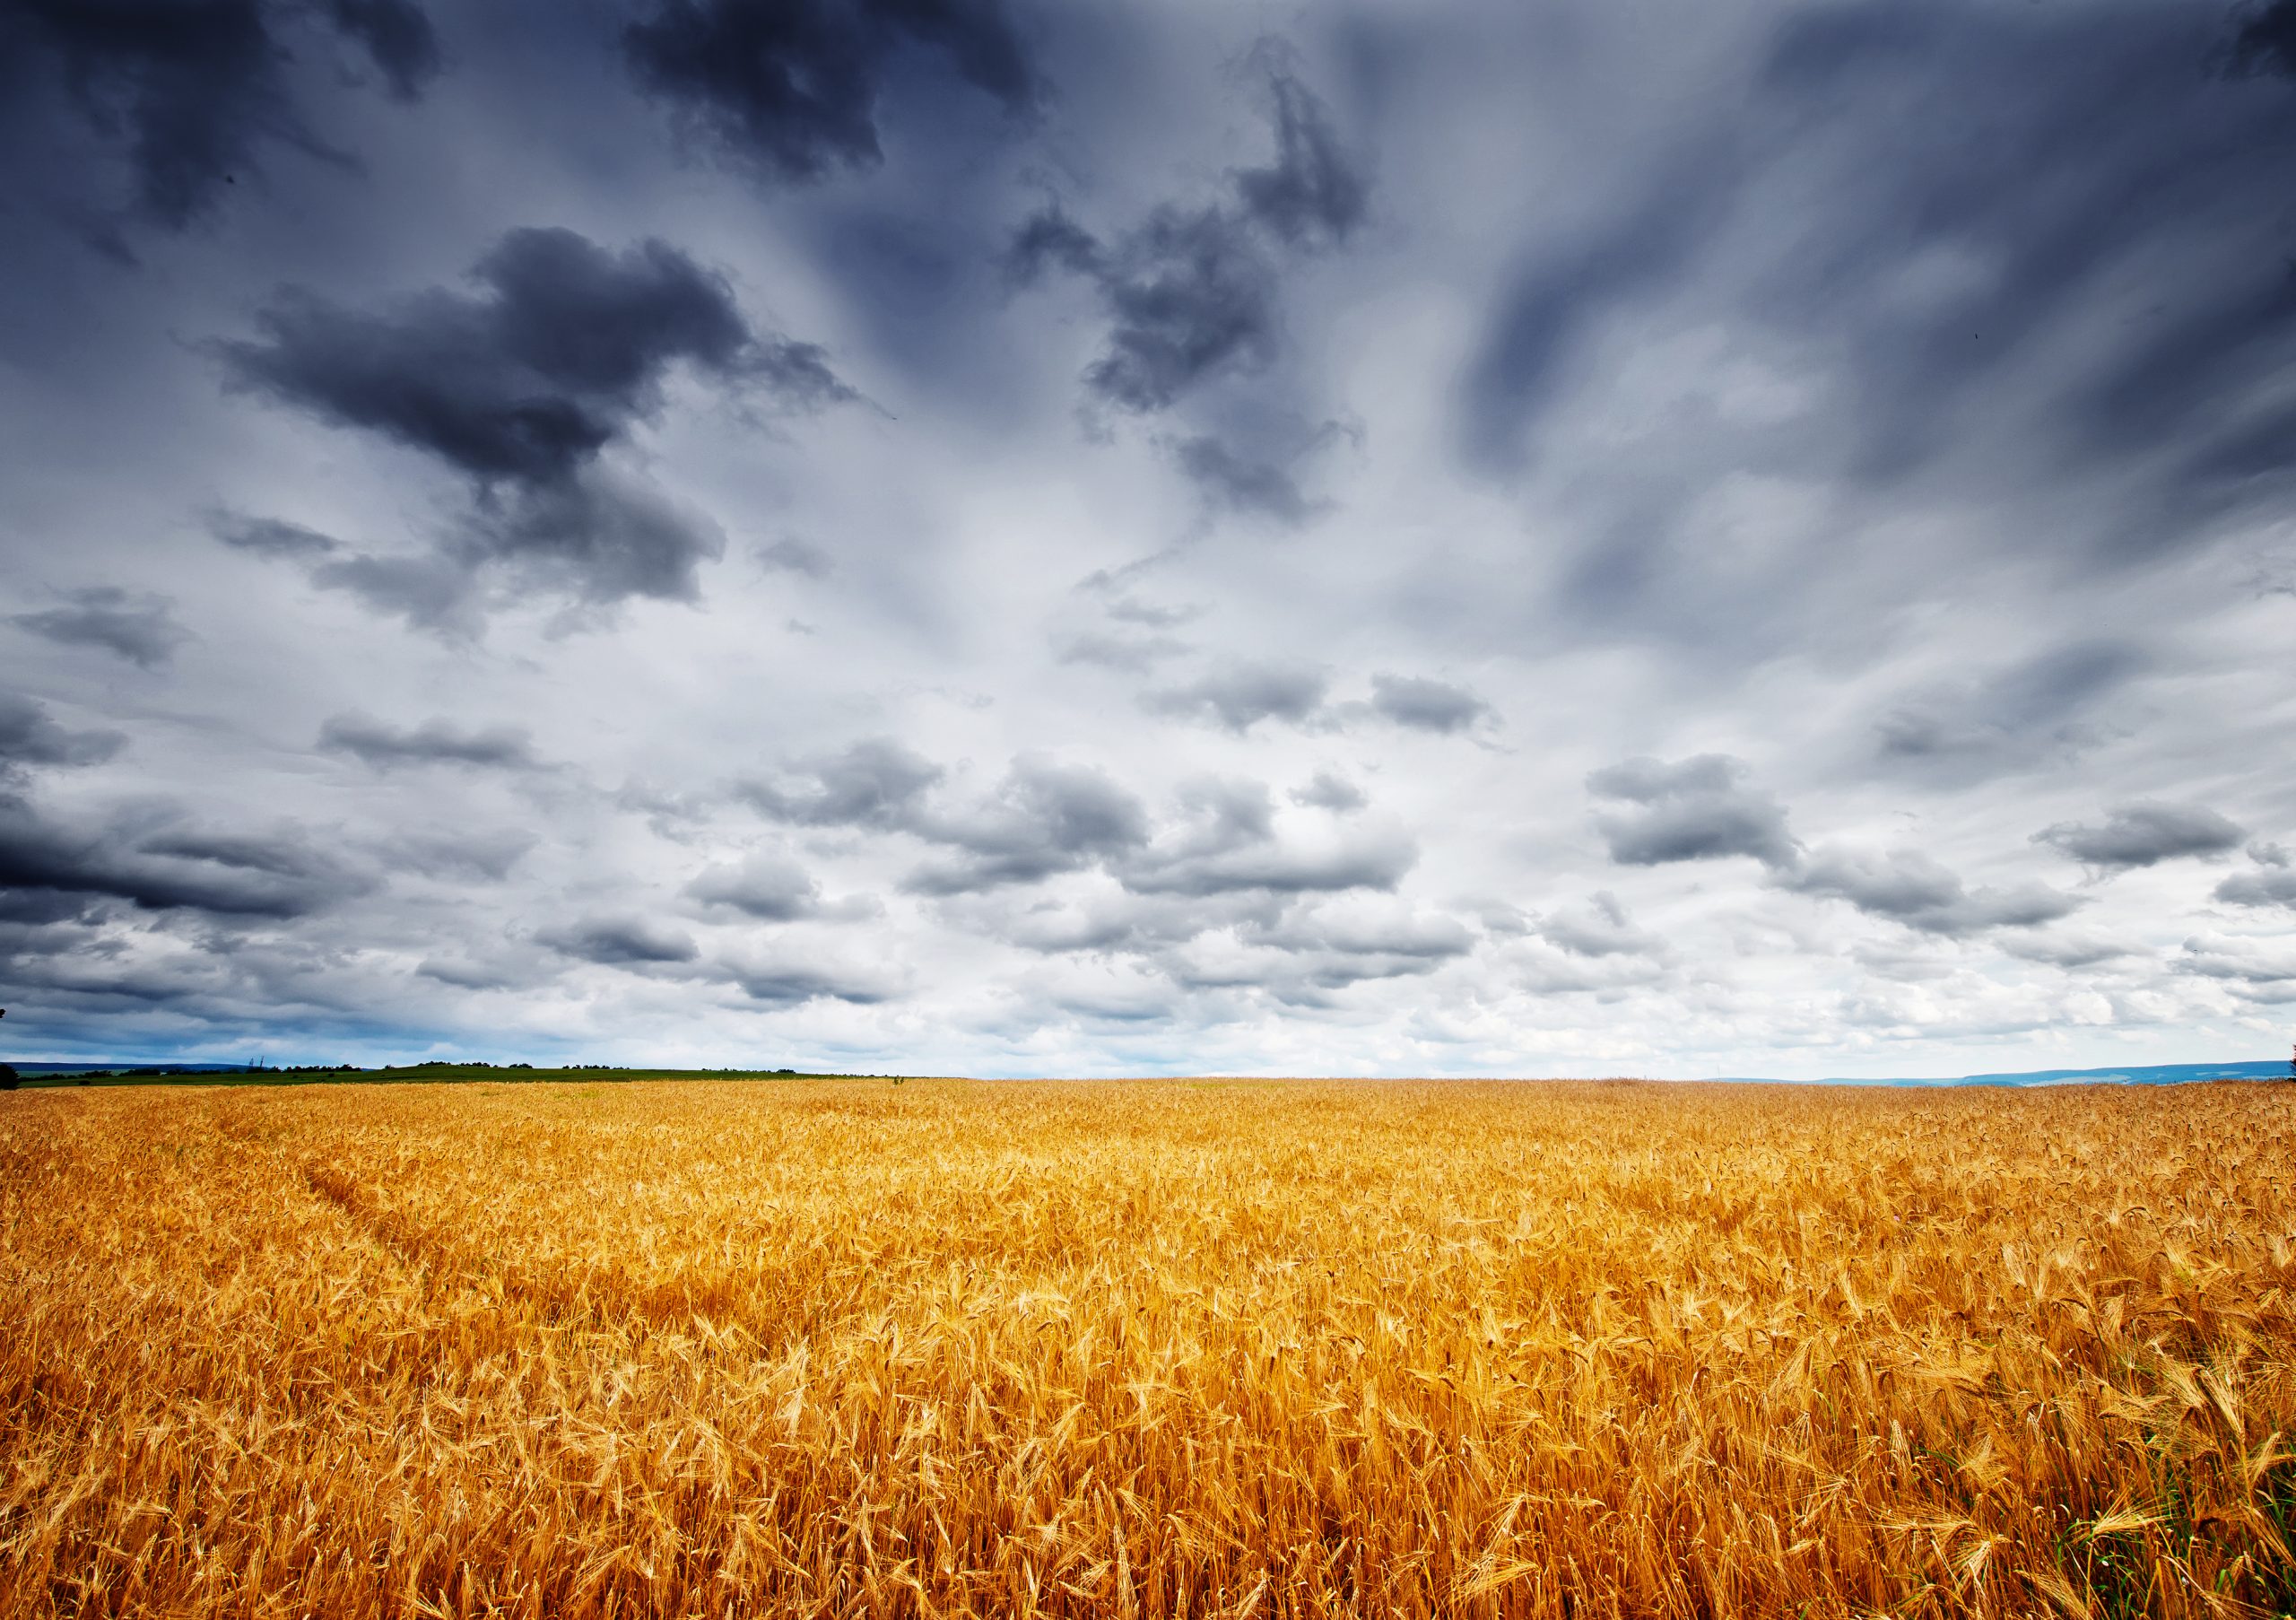 Food crisis looms as Ukrainian wheat shipments grind to halt